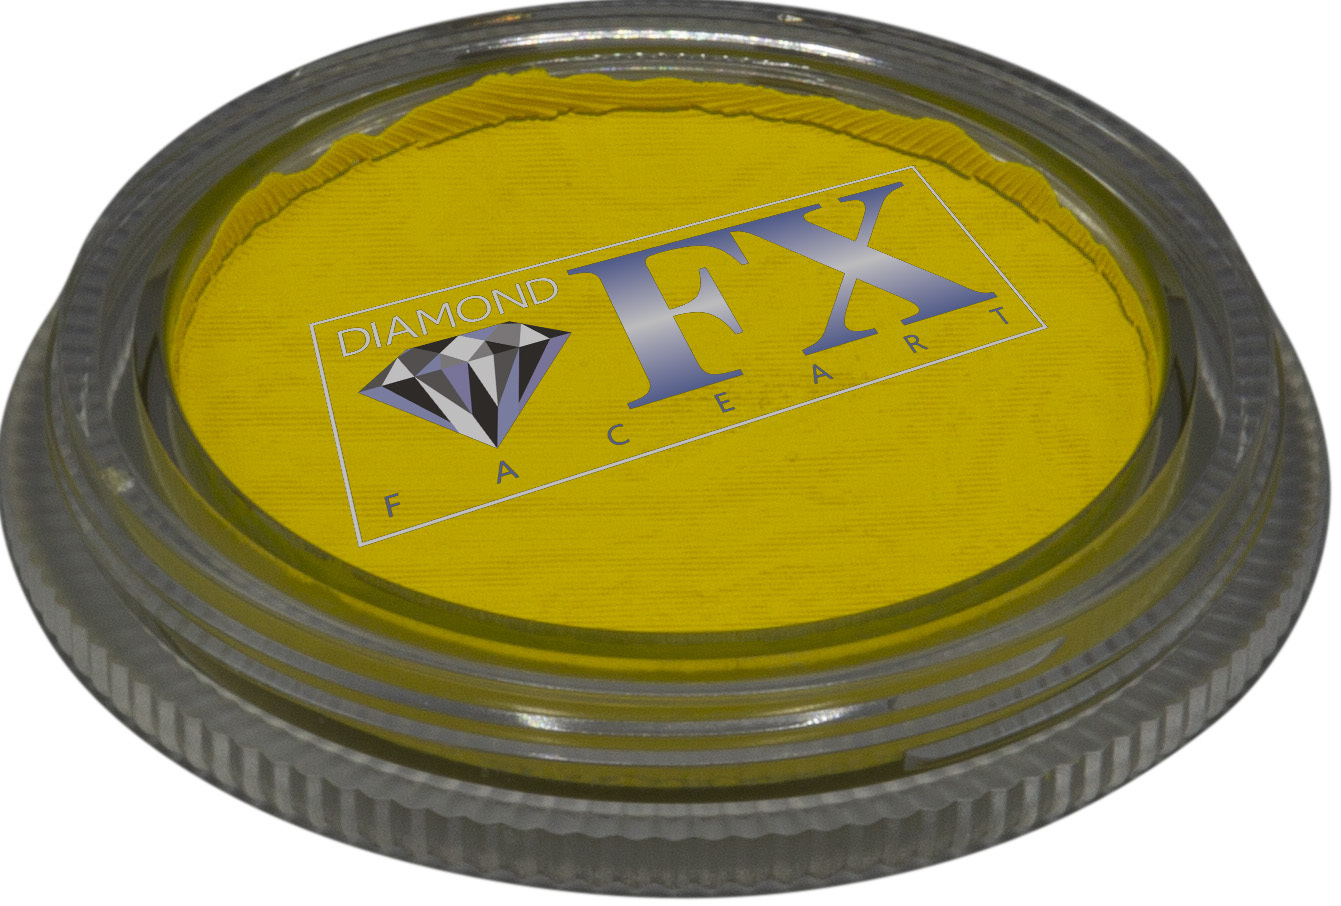 Diamond FX Lemon Yellow 30g - Small Image